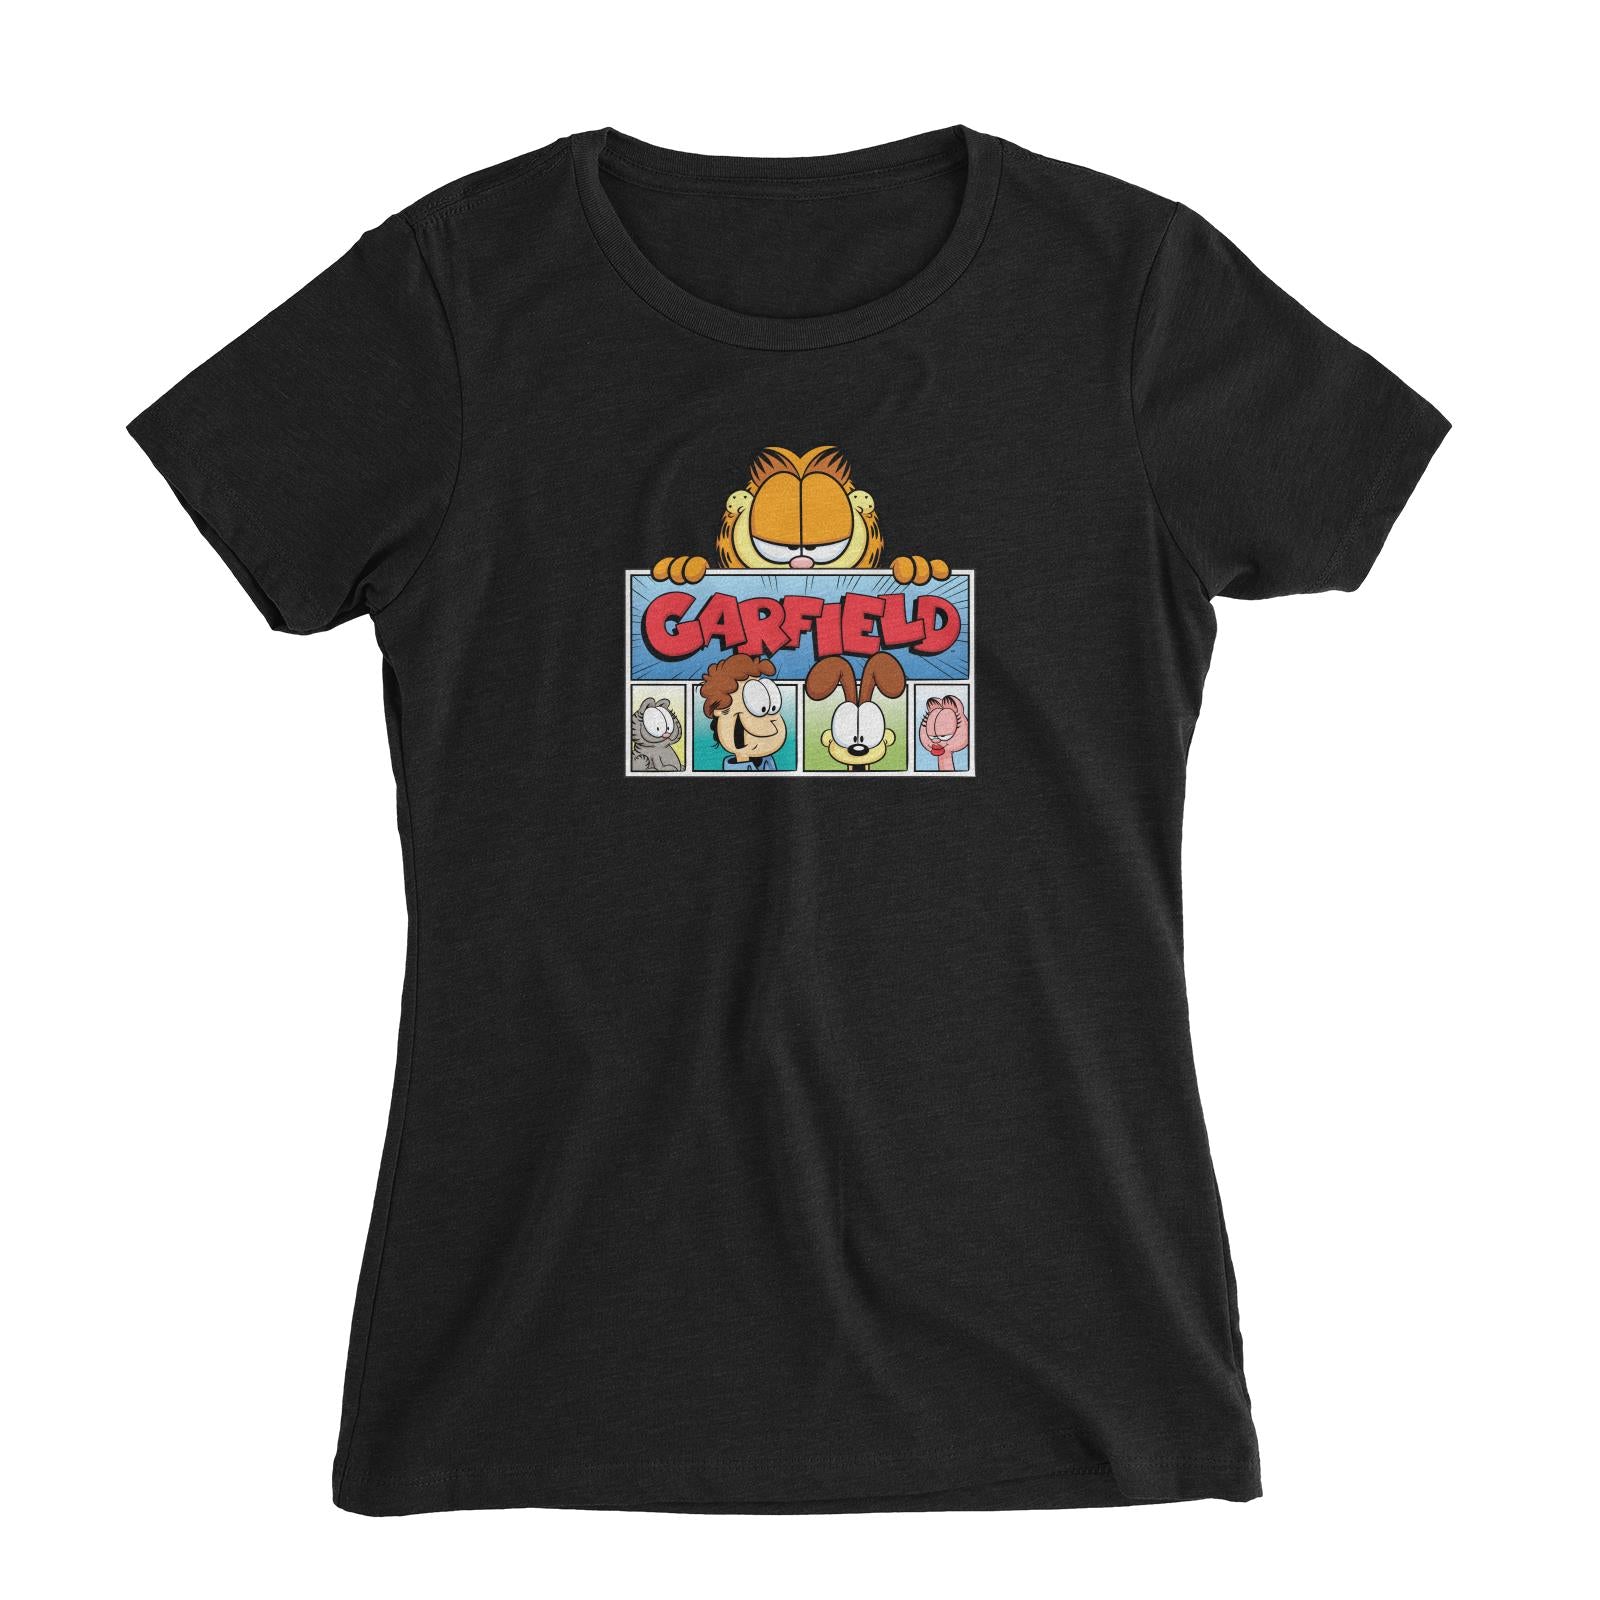 Garfield - Garfield and the Gang Women's Slim Fit T-Shirt